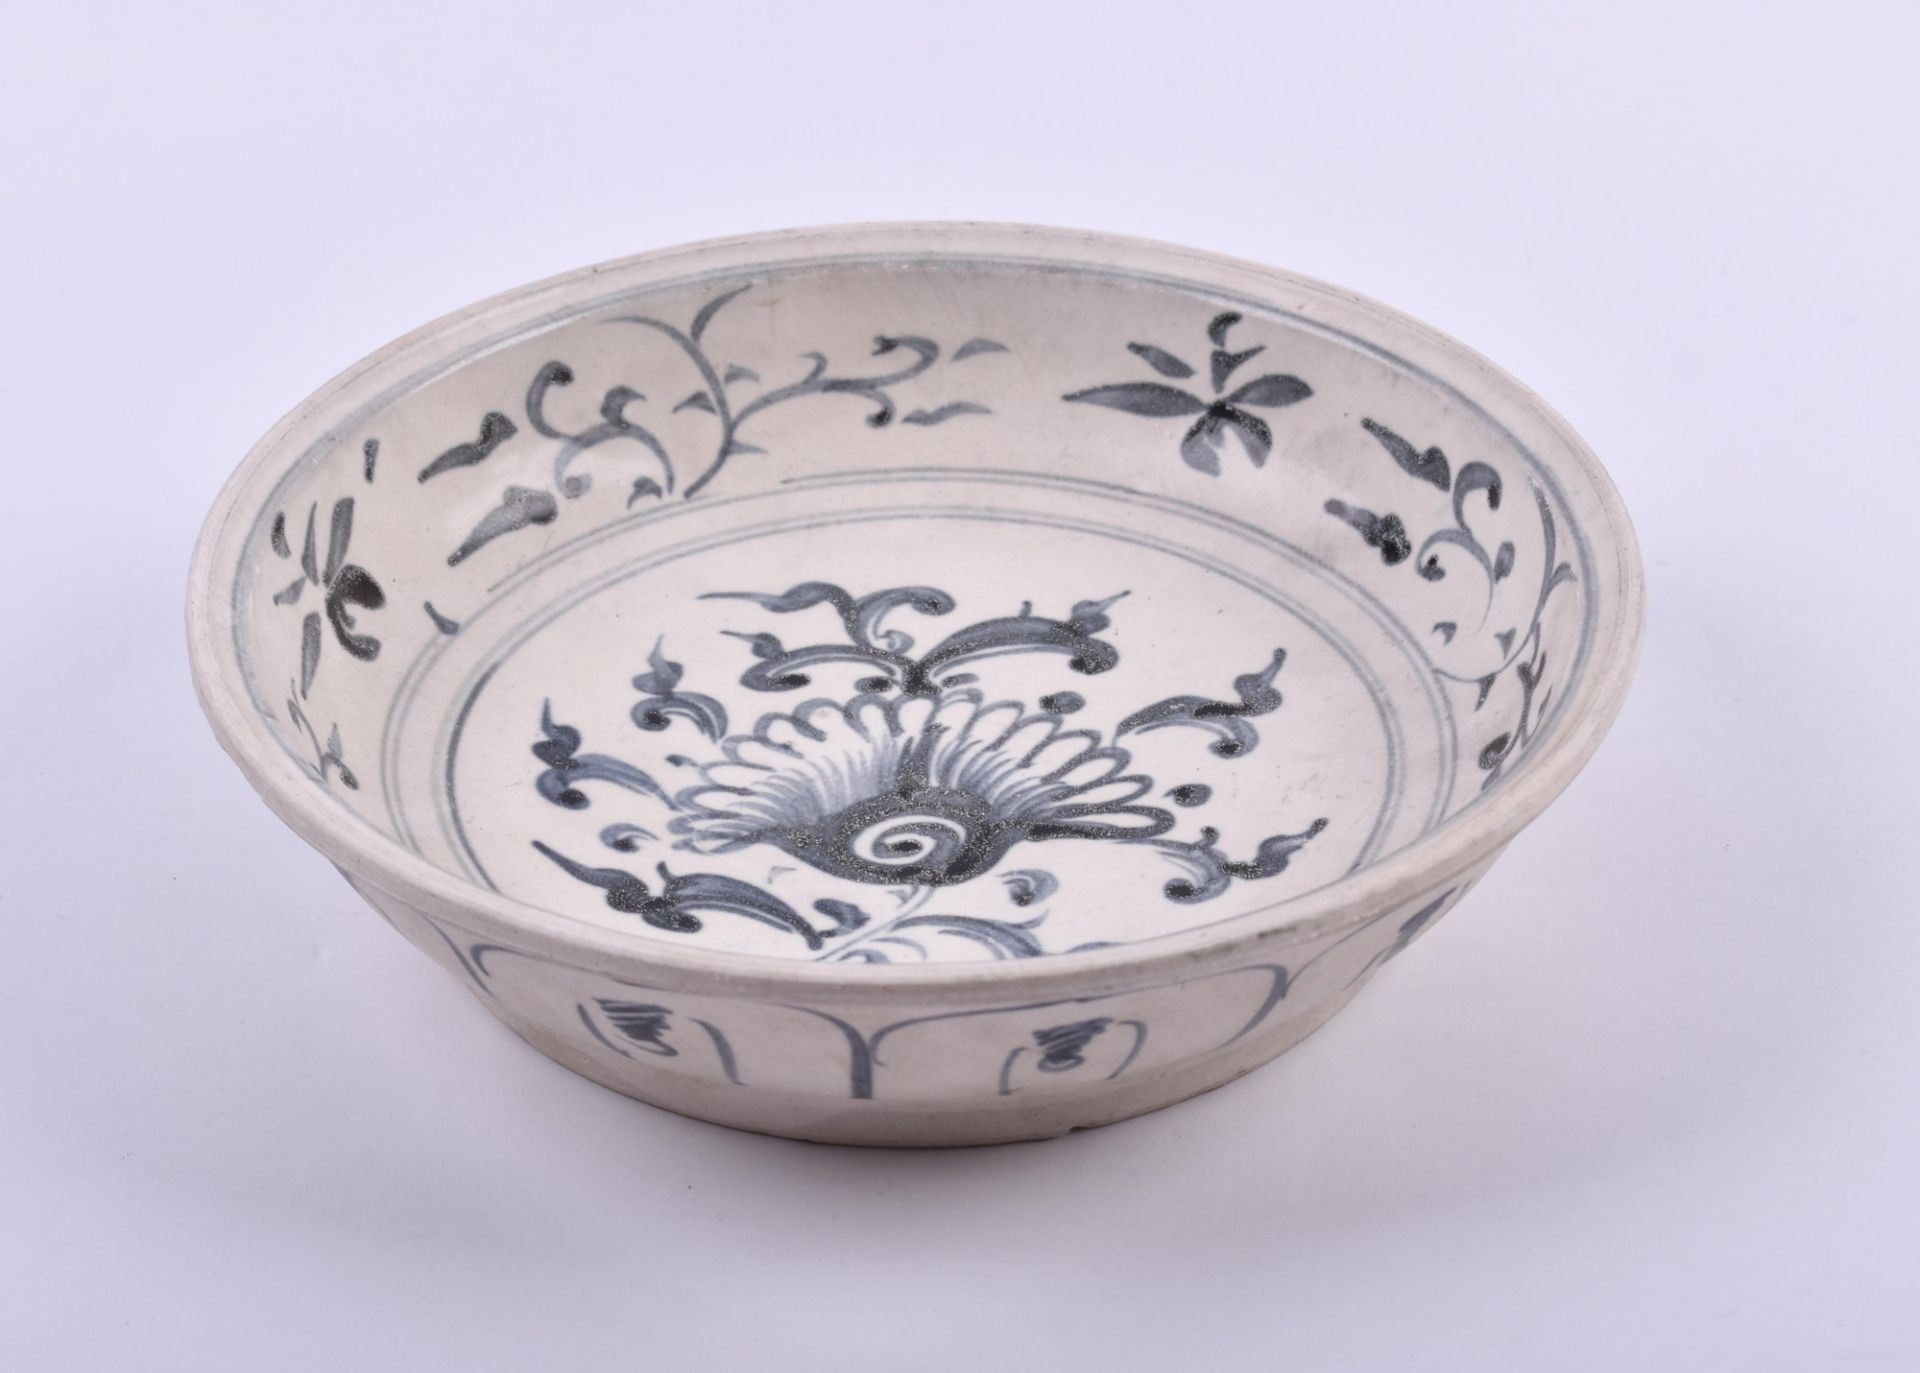  Bowl China Ming dynasty - Image 5 of 8